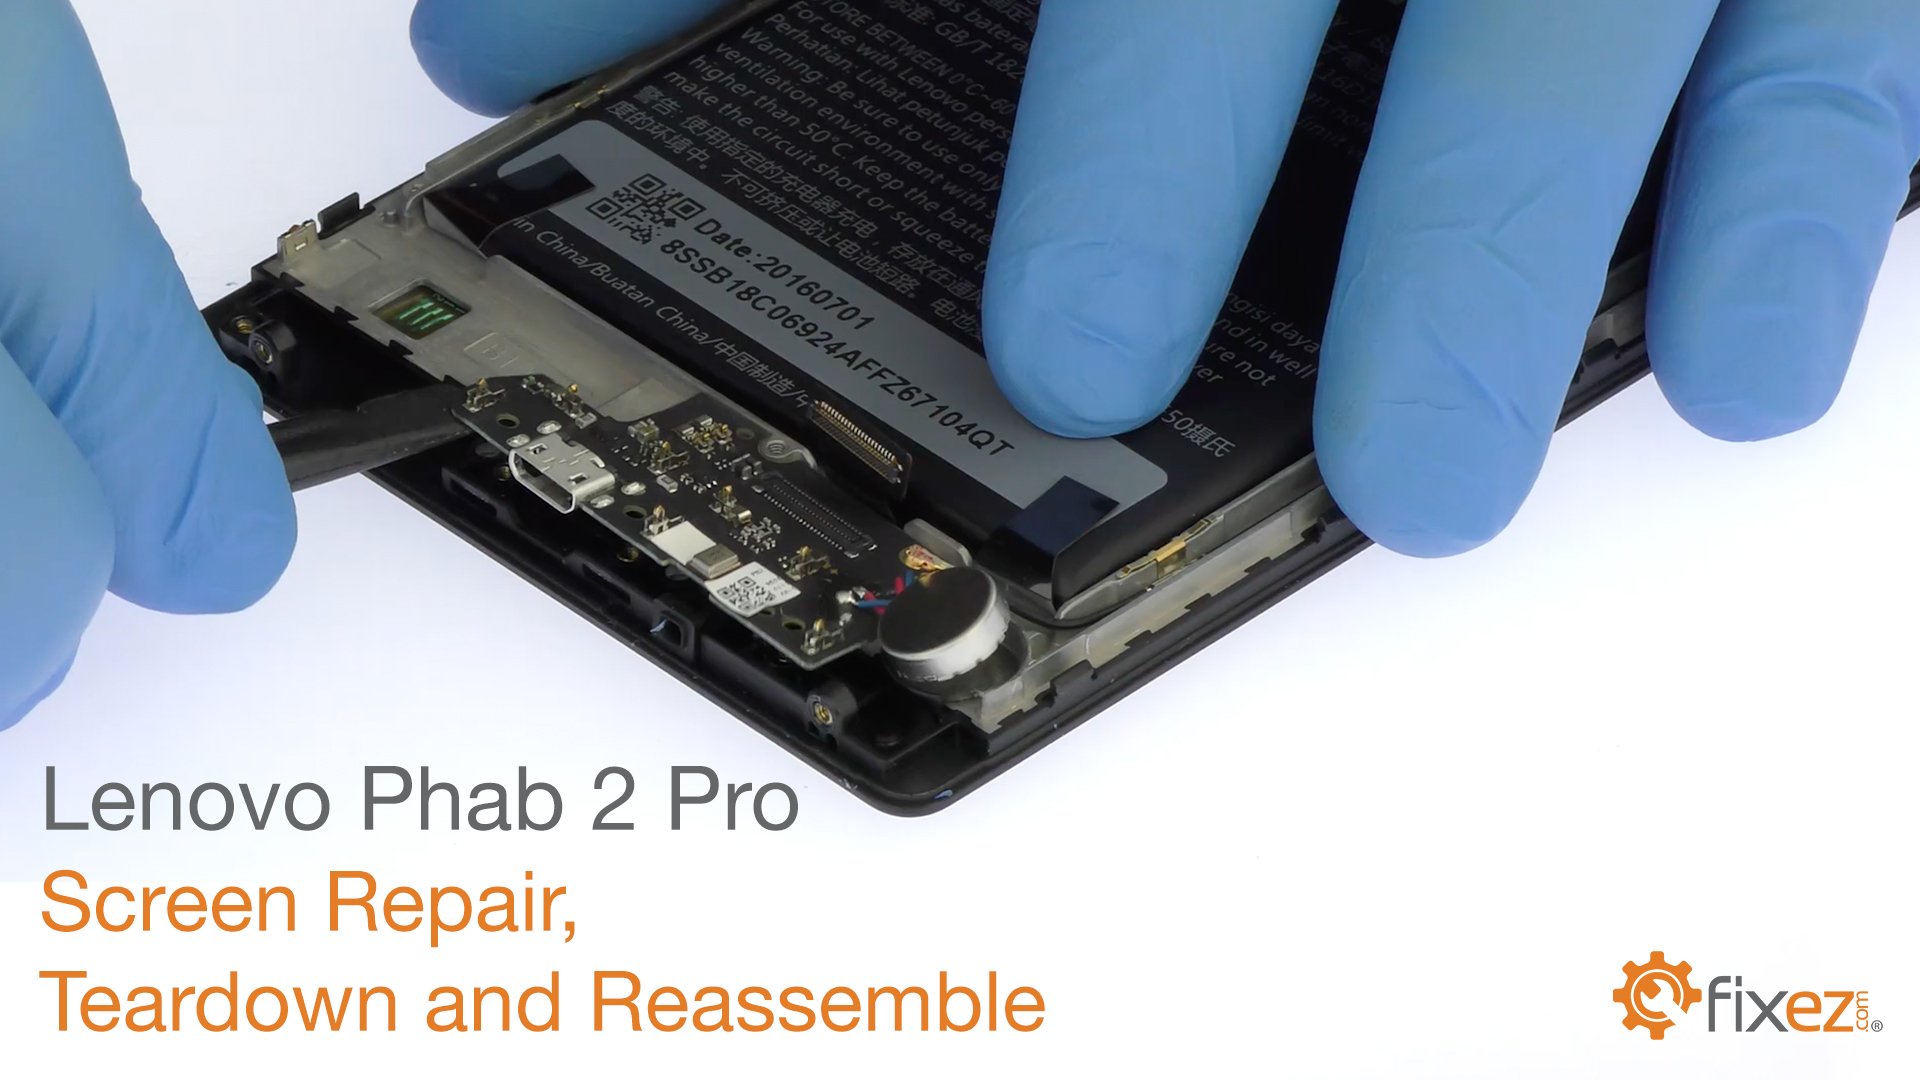 Lenovo Phab 2 Pro Screen Repair, Teardown and Reassemble